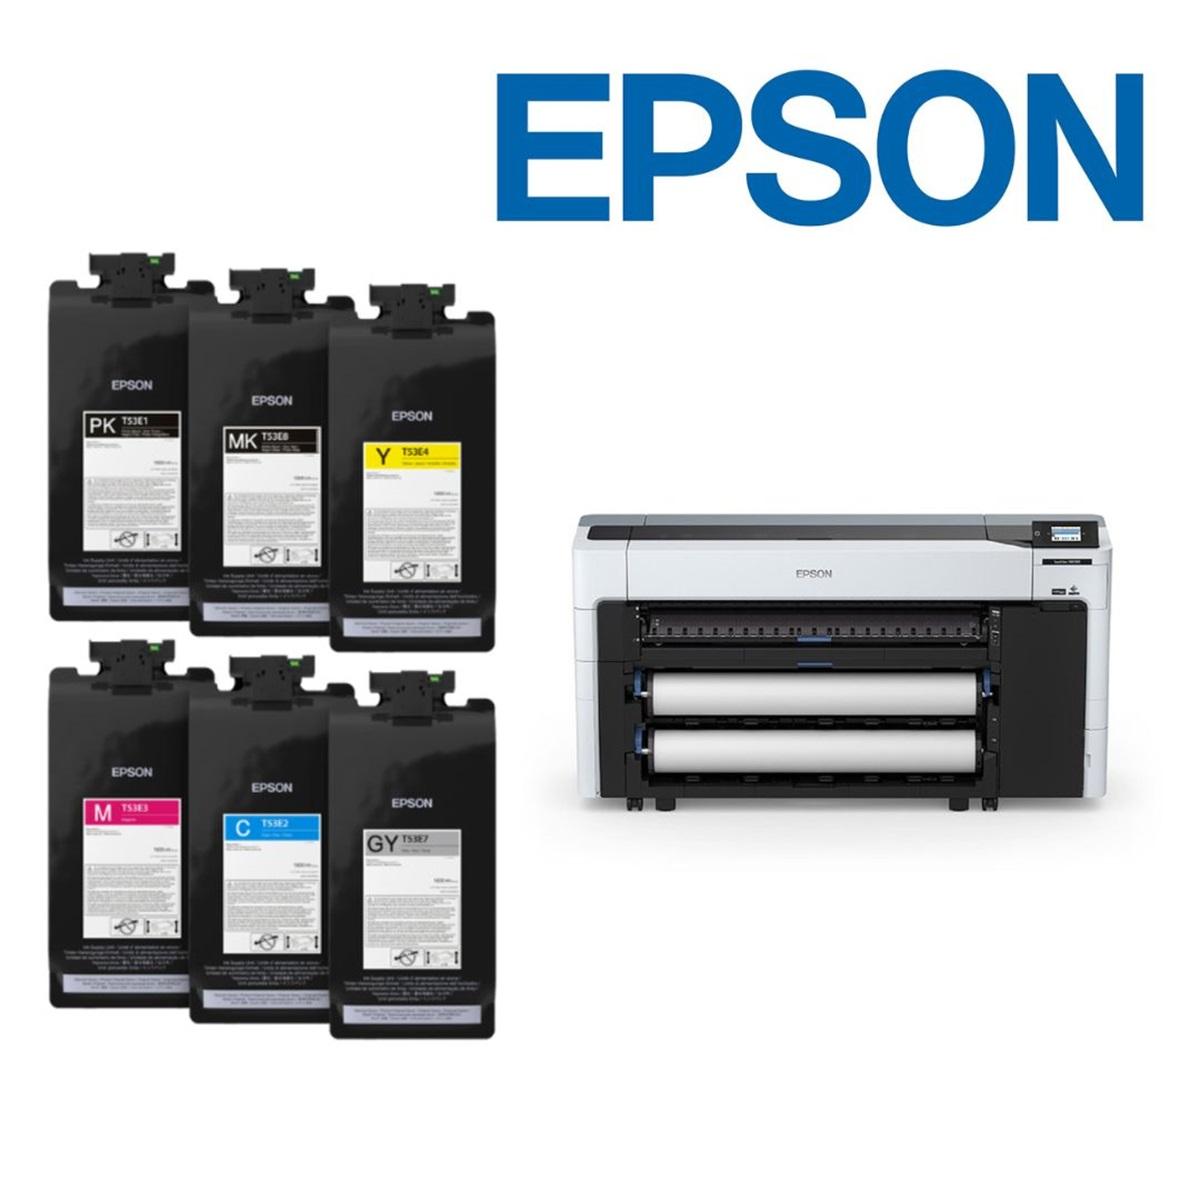 Epson UltraChrome PRO6, T53E, 1.6L Bag Ink